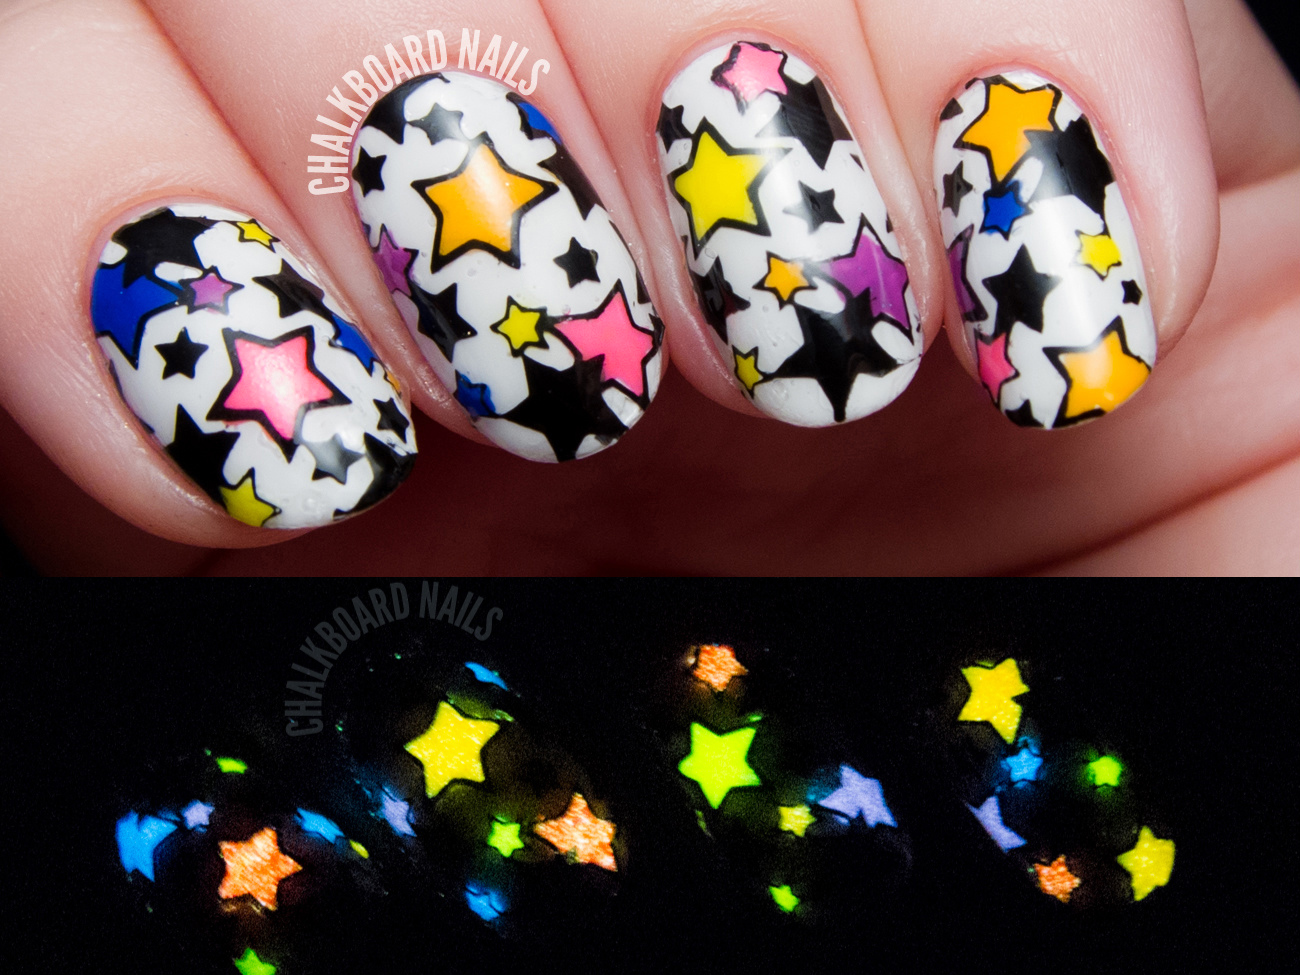 Glow in the dark star nail art by @chalkboardnails